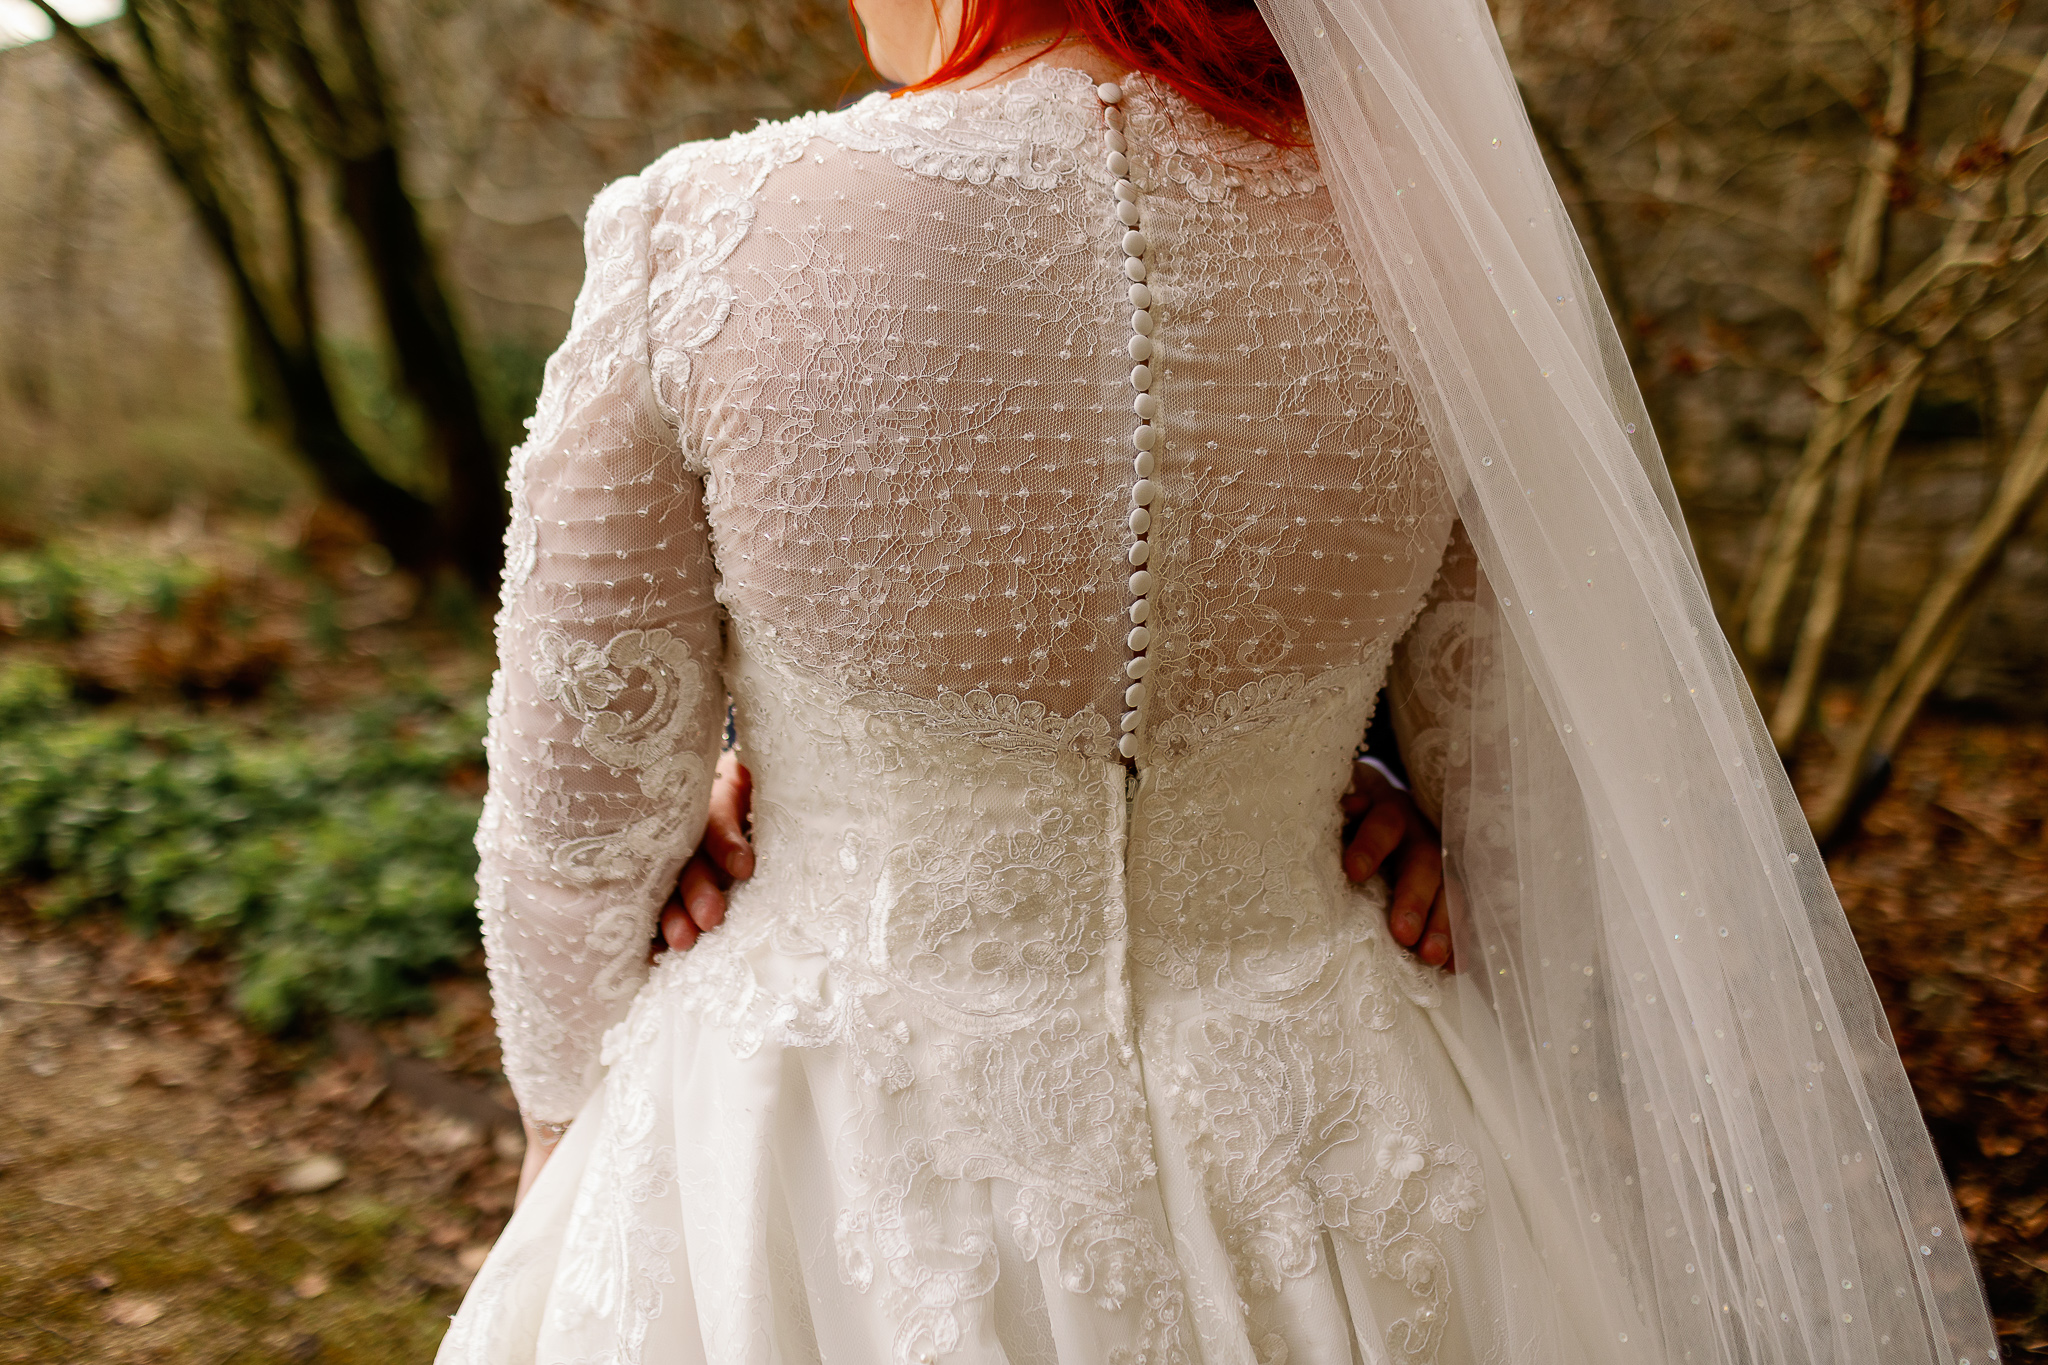 Wedding Dress details from Ava Rose 